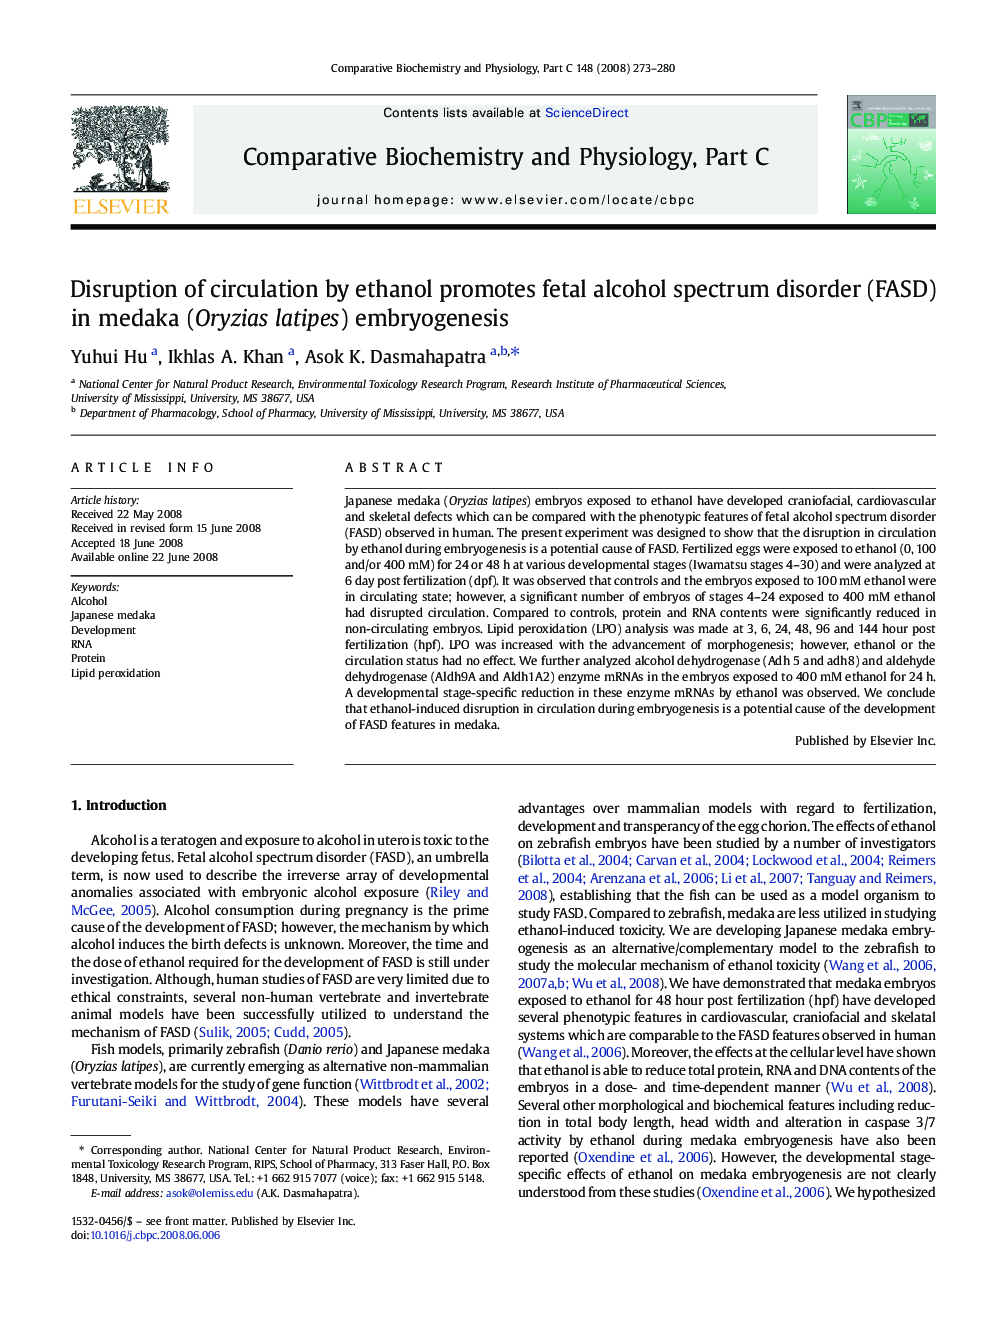 Disruption of circulation by ethanol promotes fetal alcohol spectrum disorder (FASD) in medaka (Oryzias latipes) embryogenesis